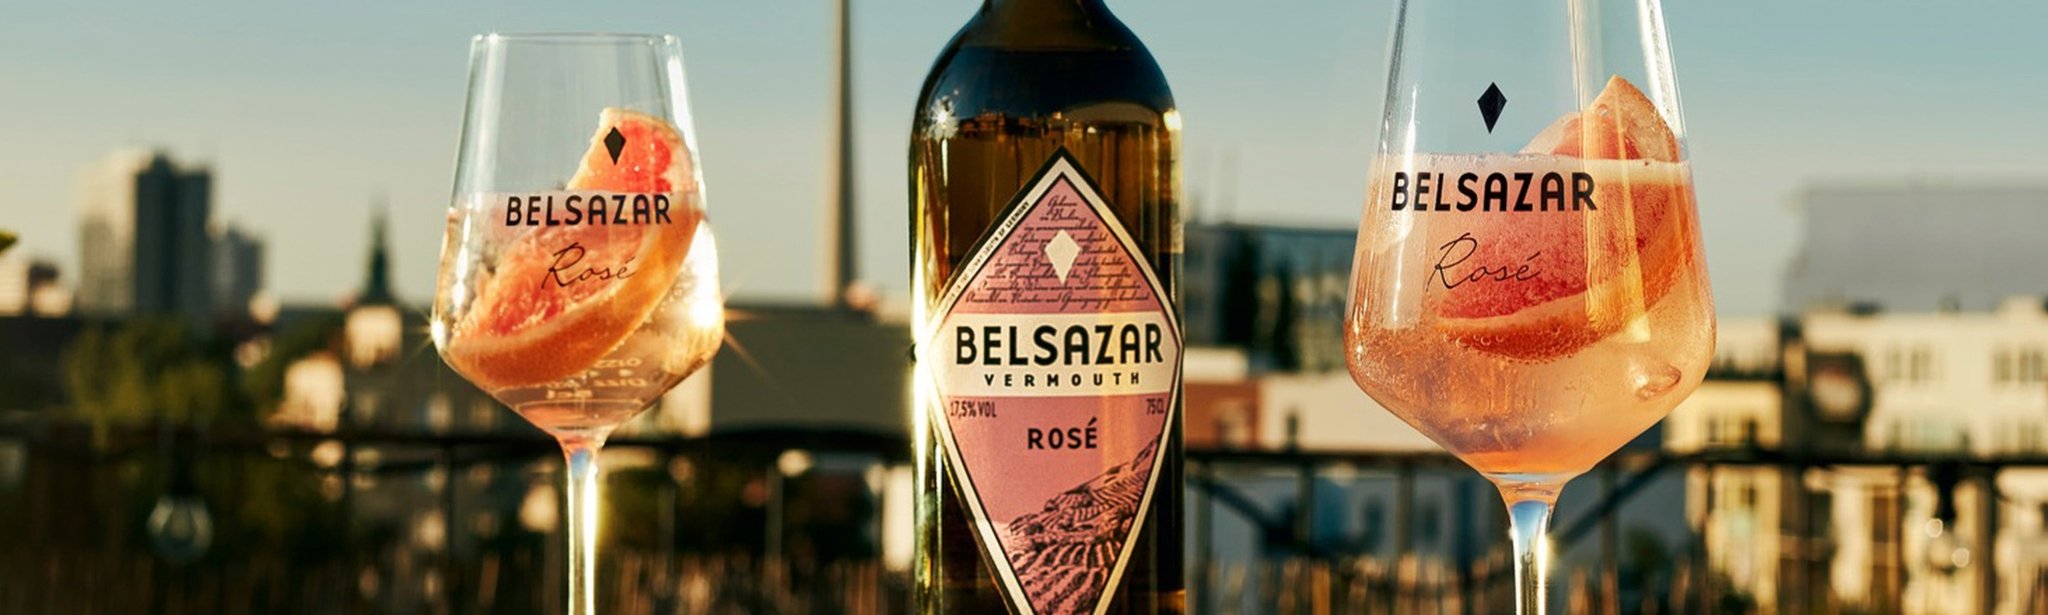 Belsazar Vermouth - The Bottle Club